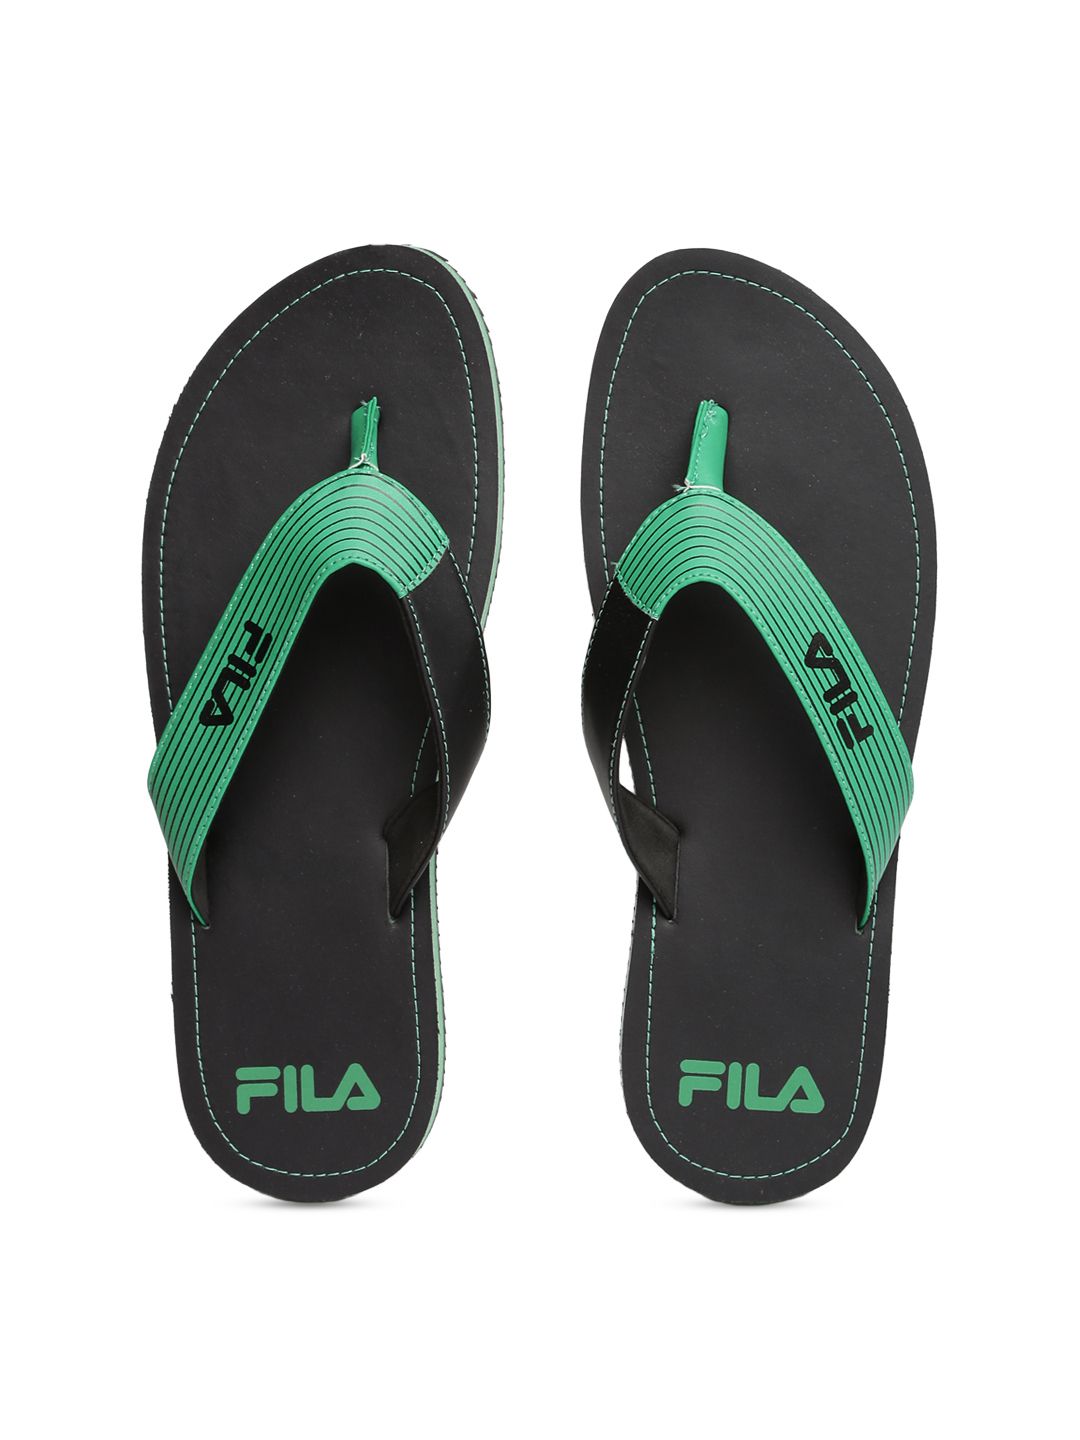 Fila Curve Green Flip Flops for Men online in India at Best price on ...